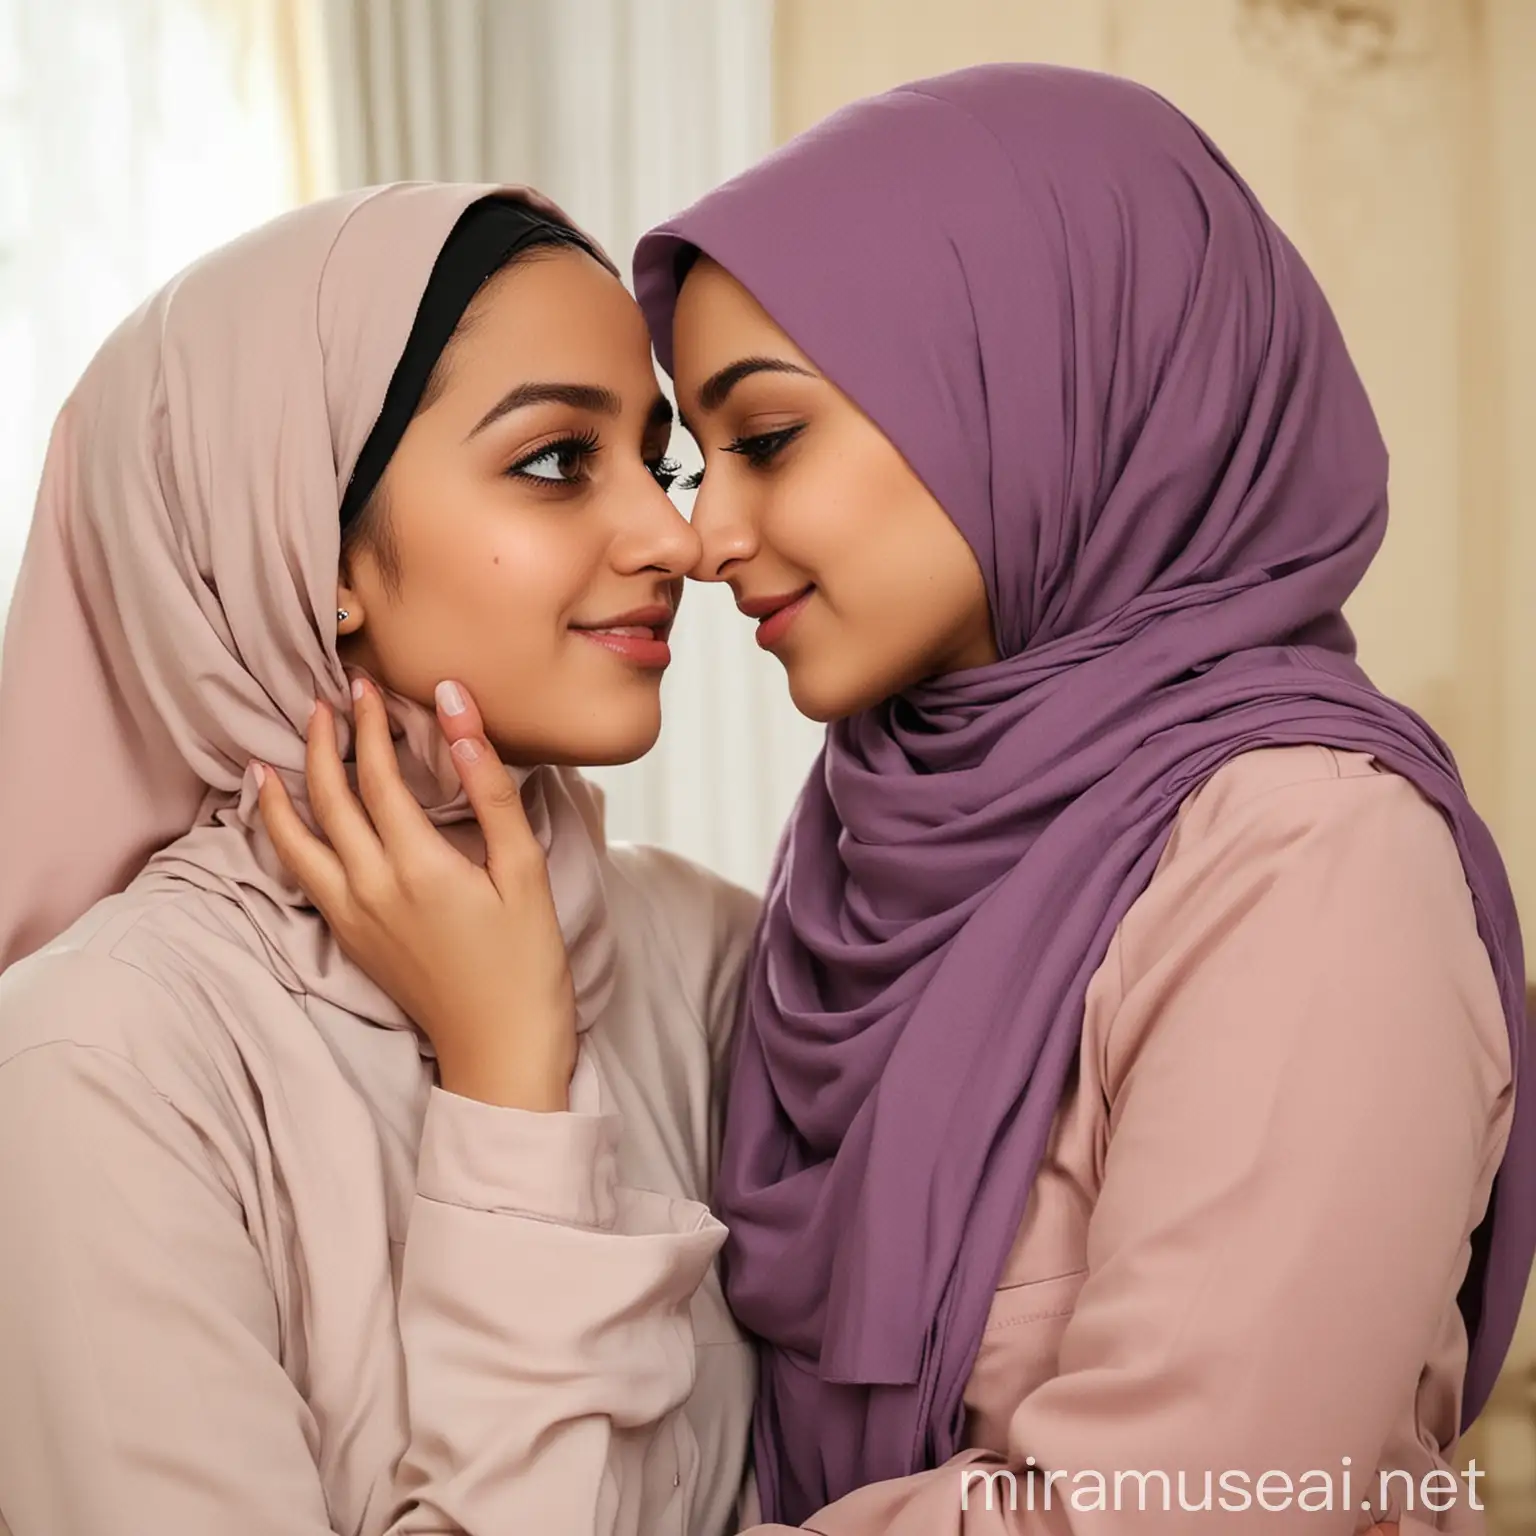 Muslim Lesbian Couple Embracing at Home